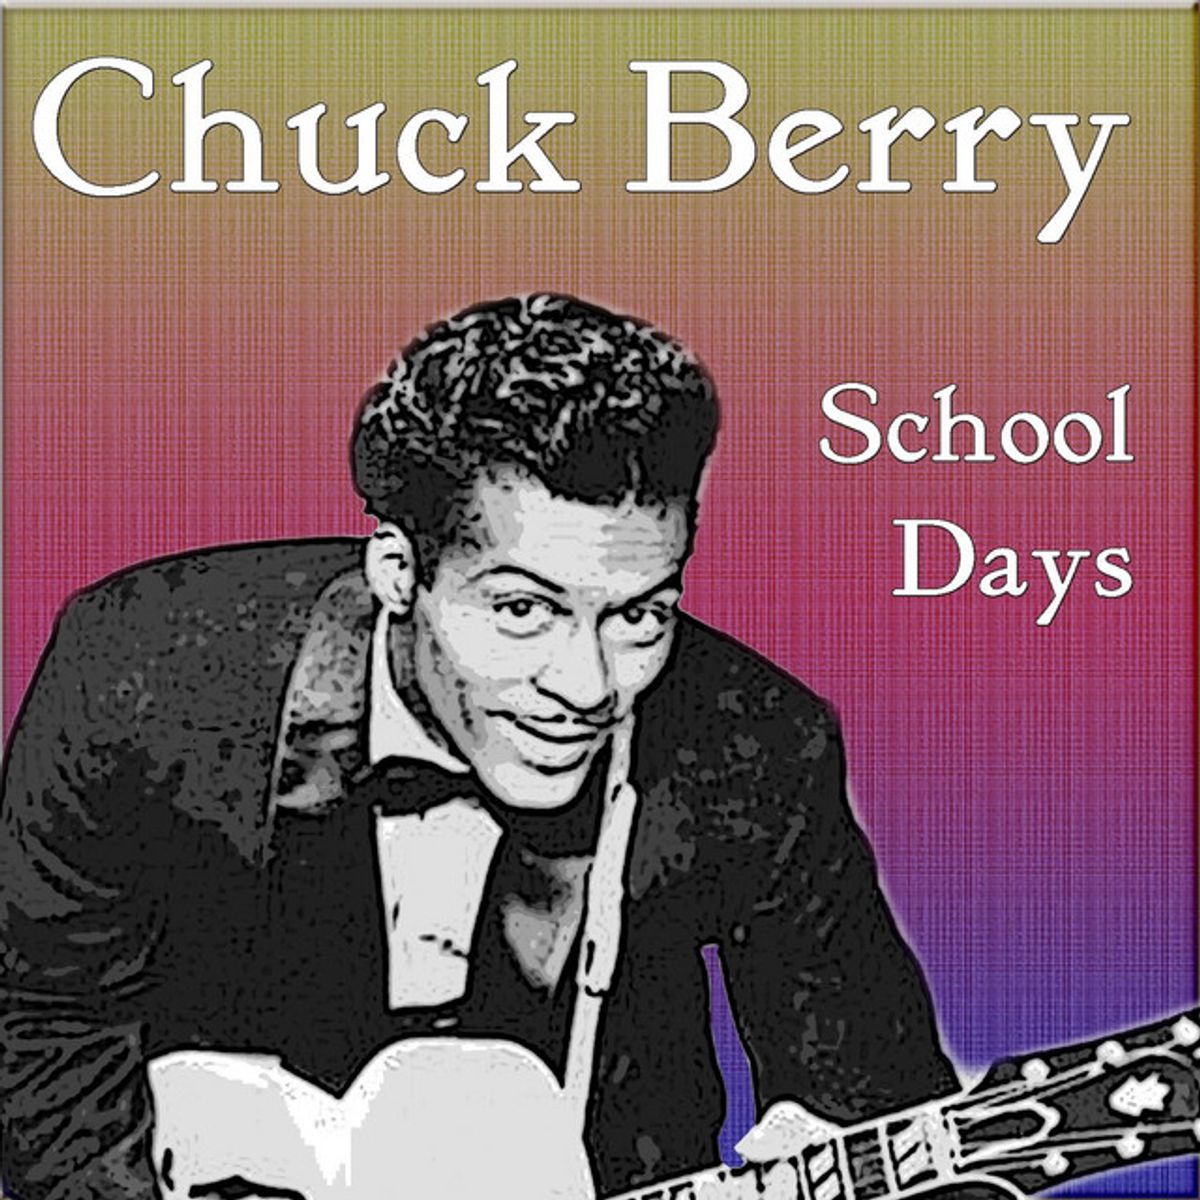 #SchoolStart - Chuck Berry - School Days (1957)